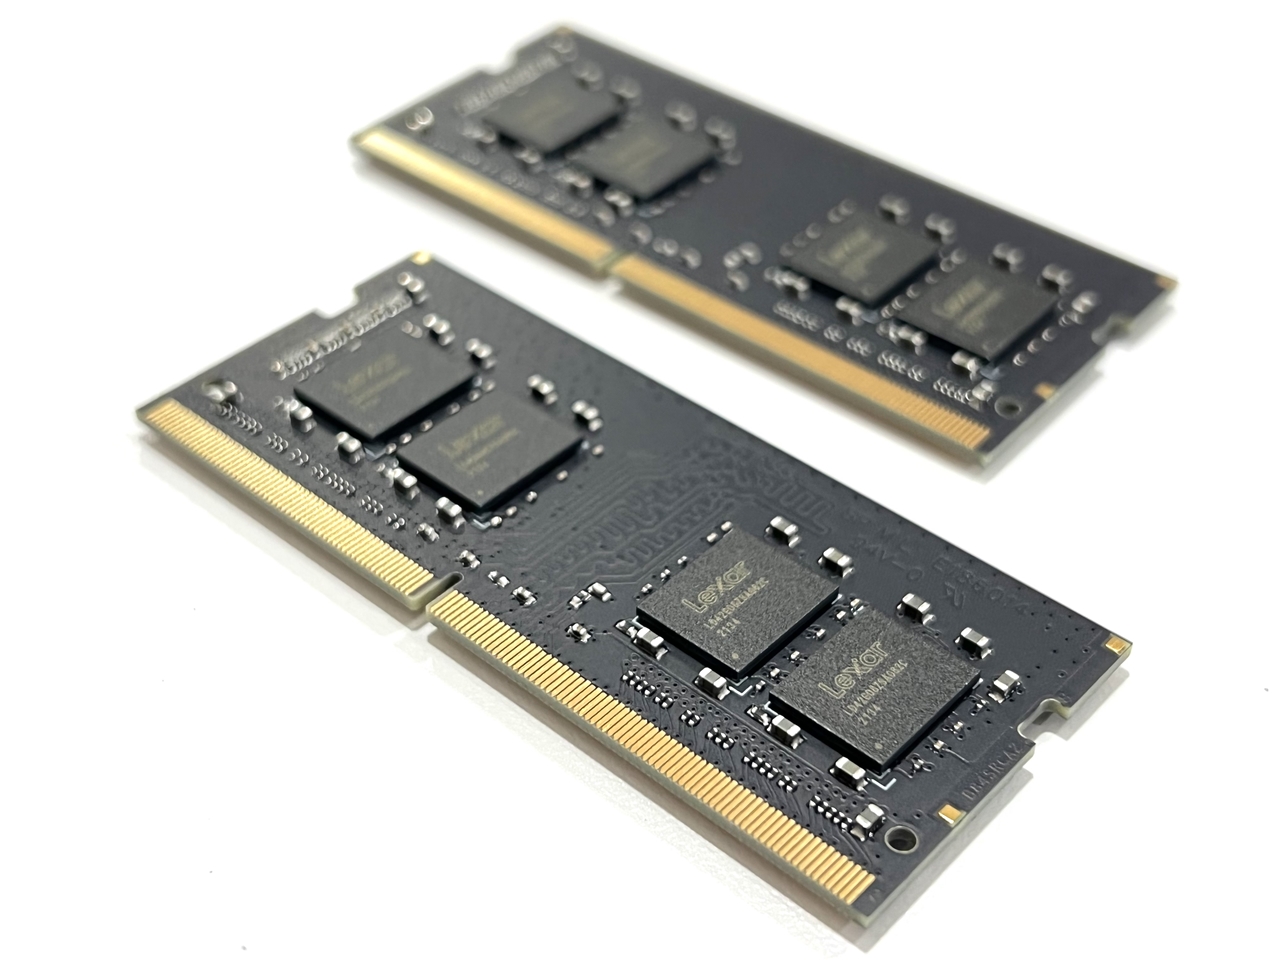 Lexar DDR4-2666 SODIMM Laptop Memory Review - PCTestBench